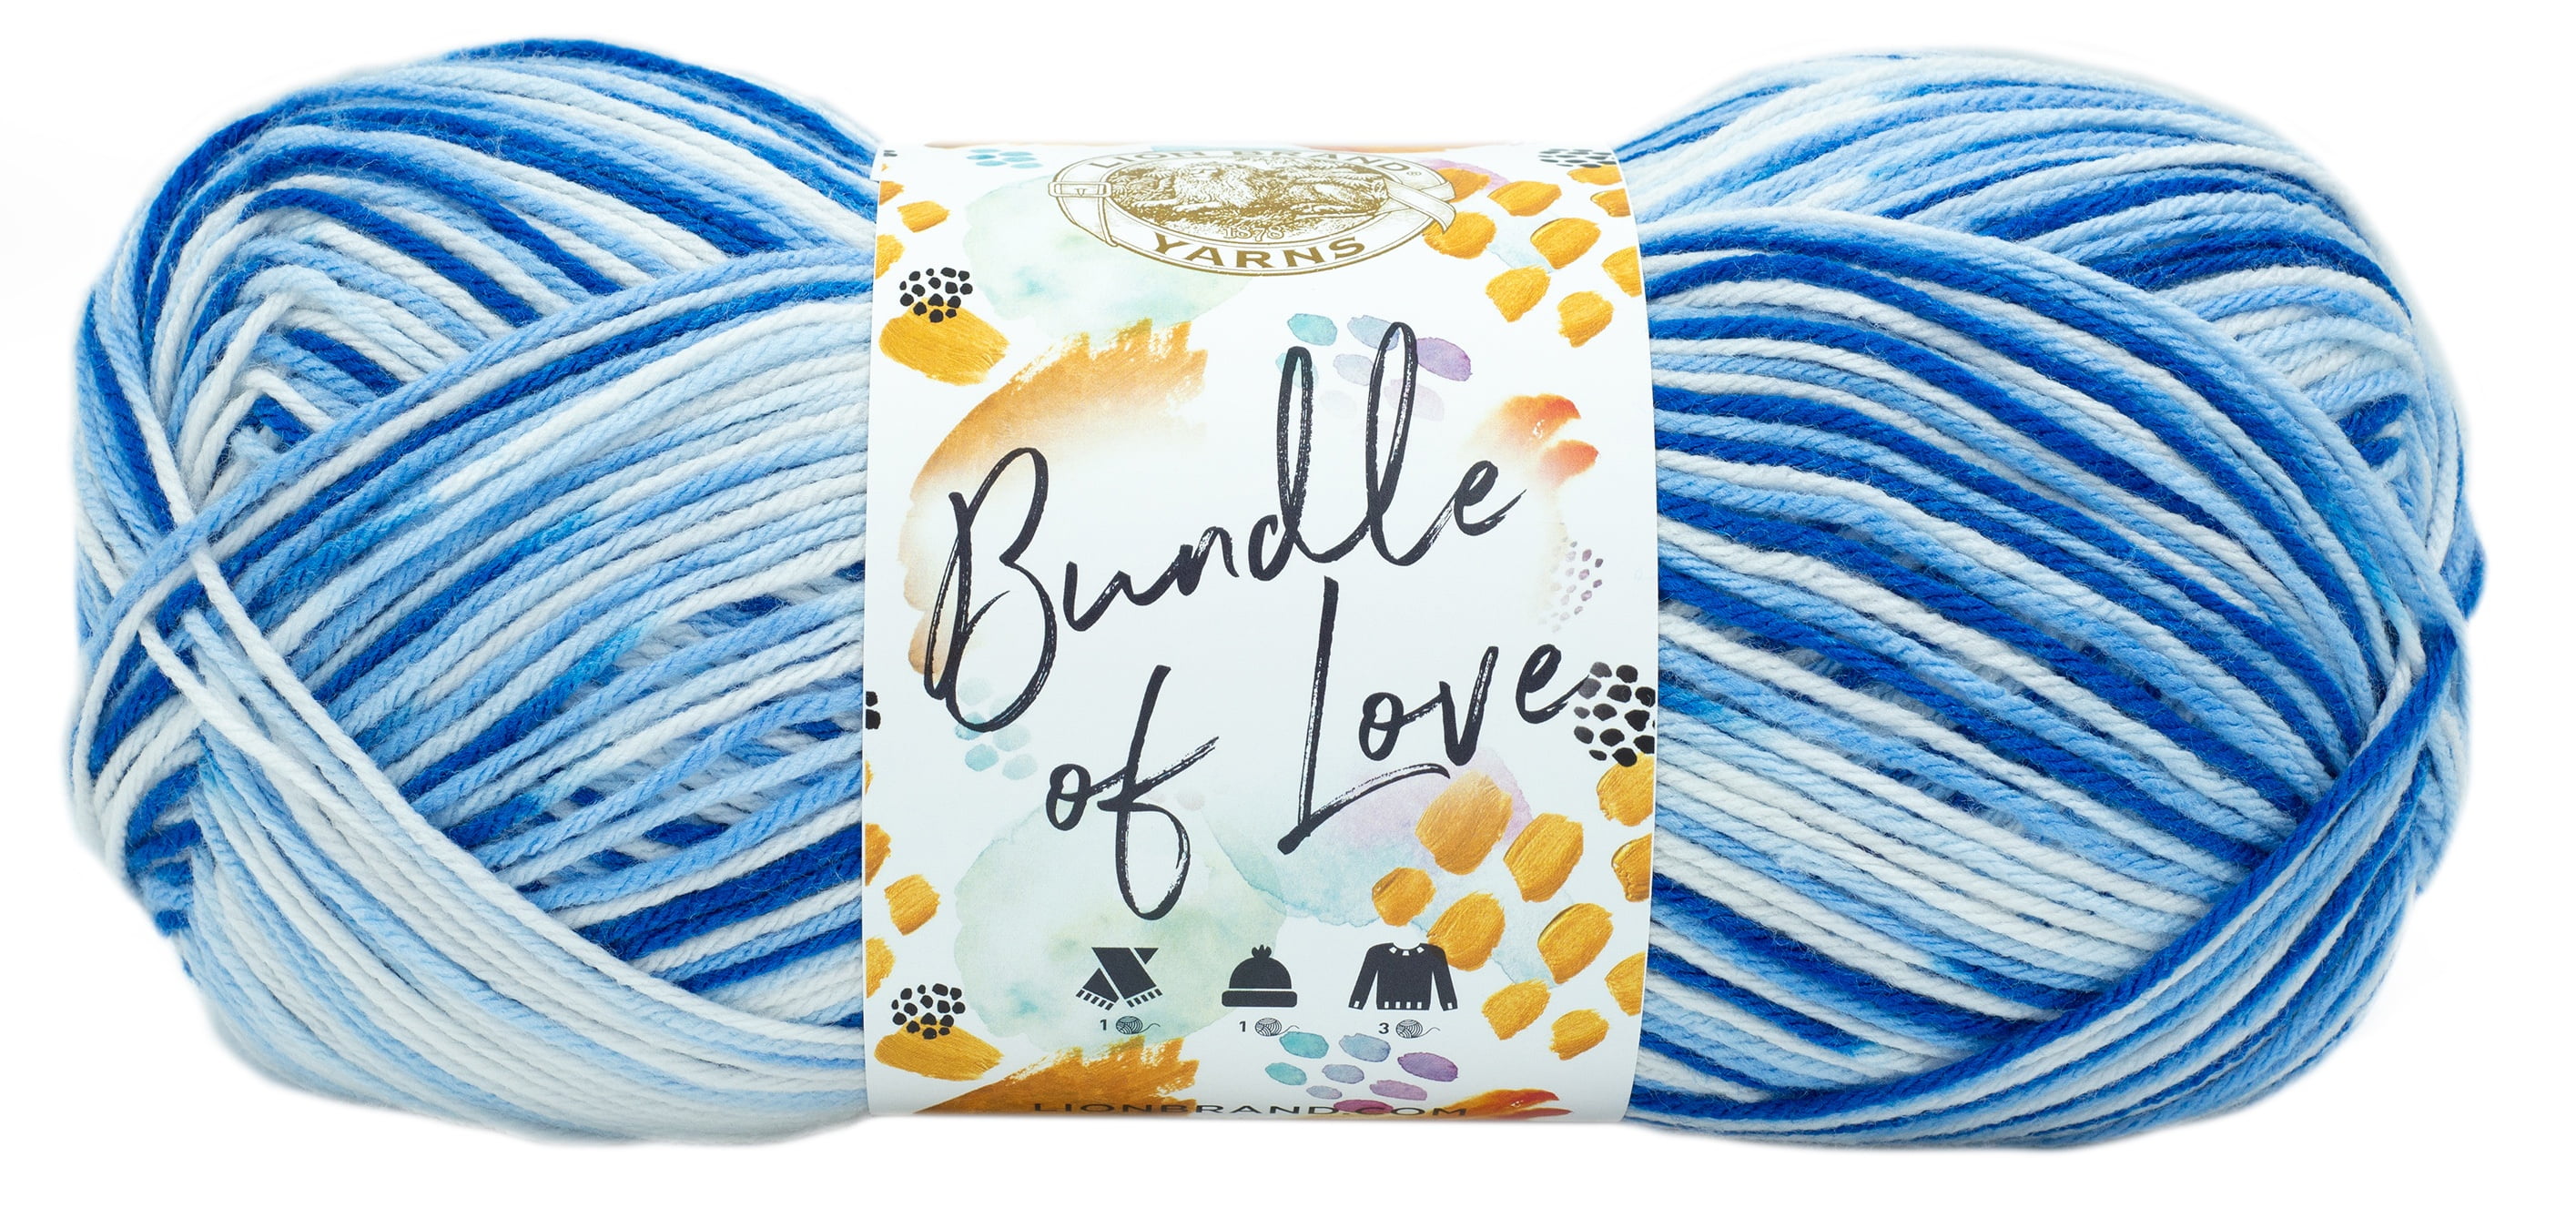  Lion Brand Yarn Pound of Love, Value Yarn, Large Yarn for  Knitting and Crocheting, Craft Yarn, Pastel Blue